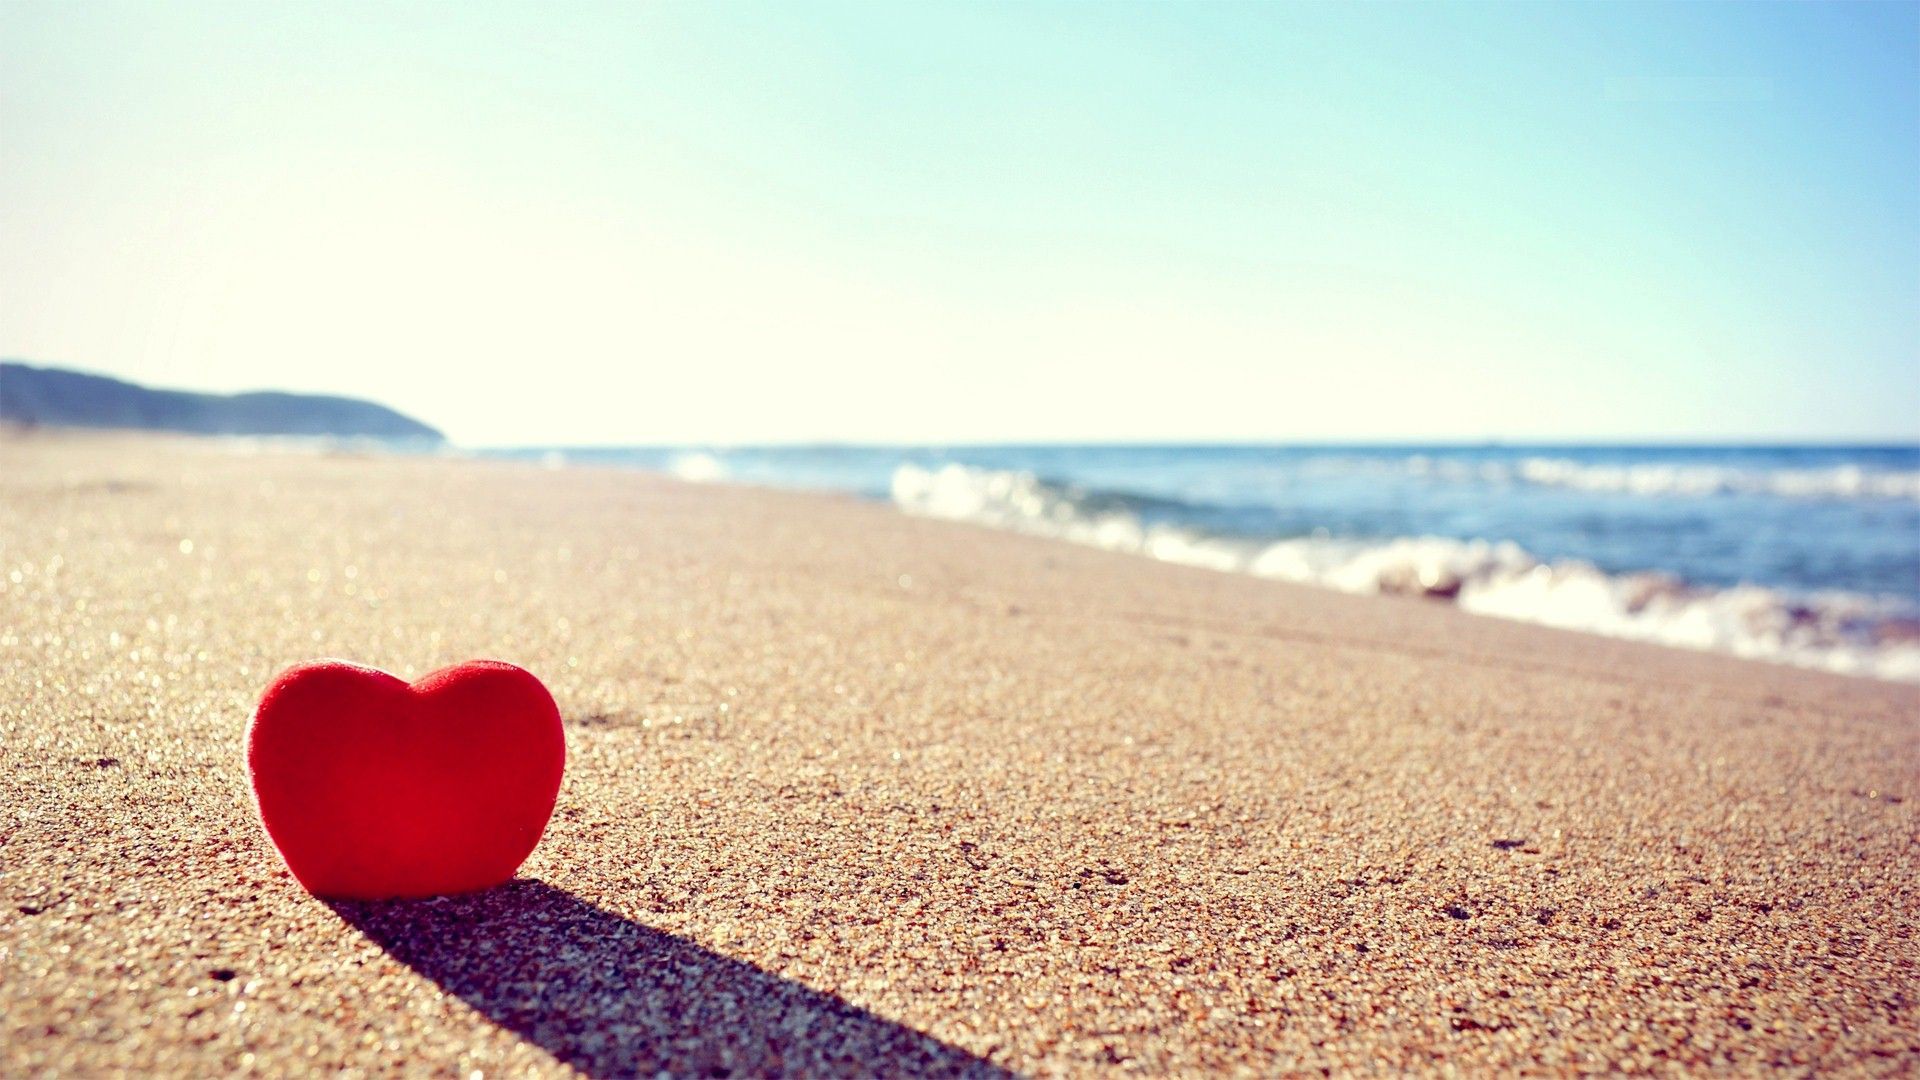 Love heart on beach photo background. Cute love